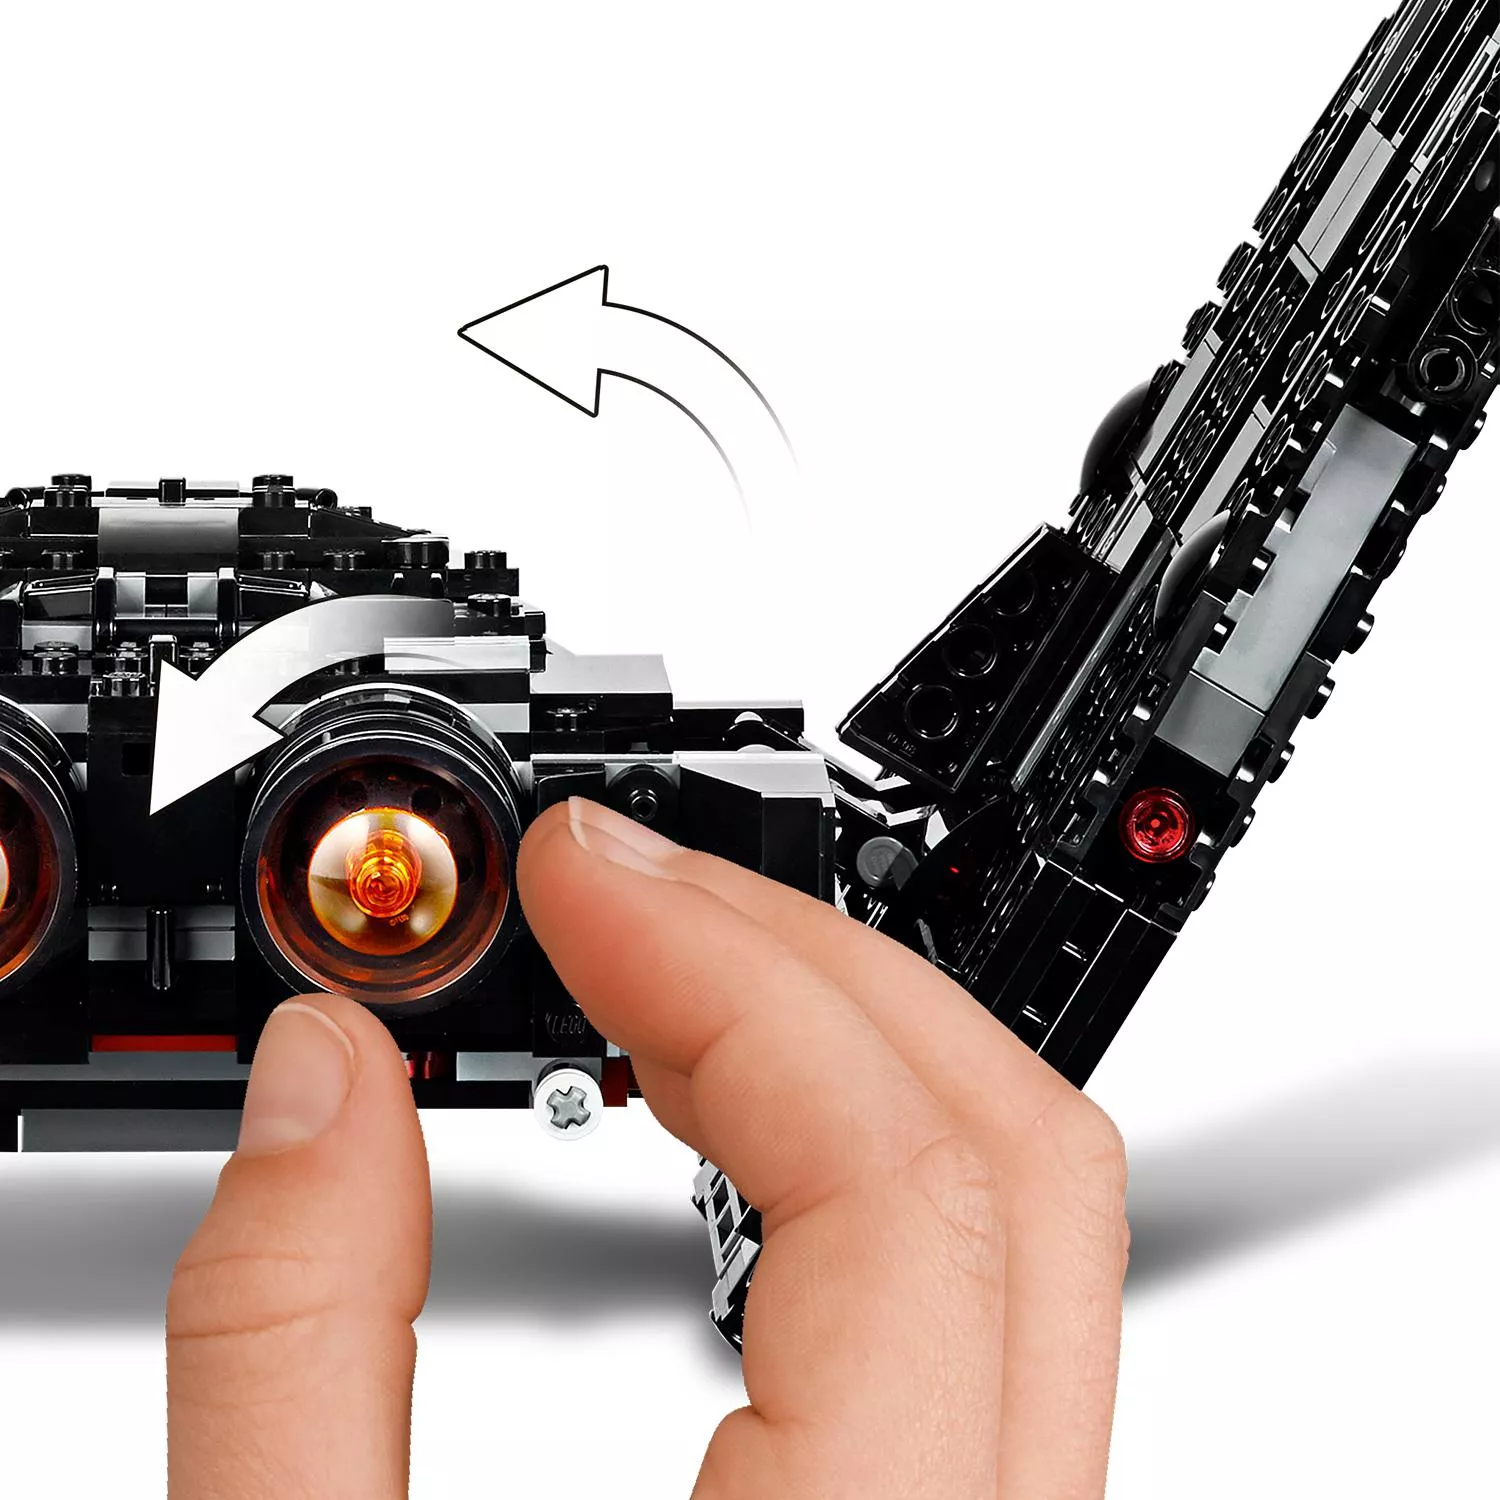 LEGO Star Wars Kylo Rens Shuttle